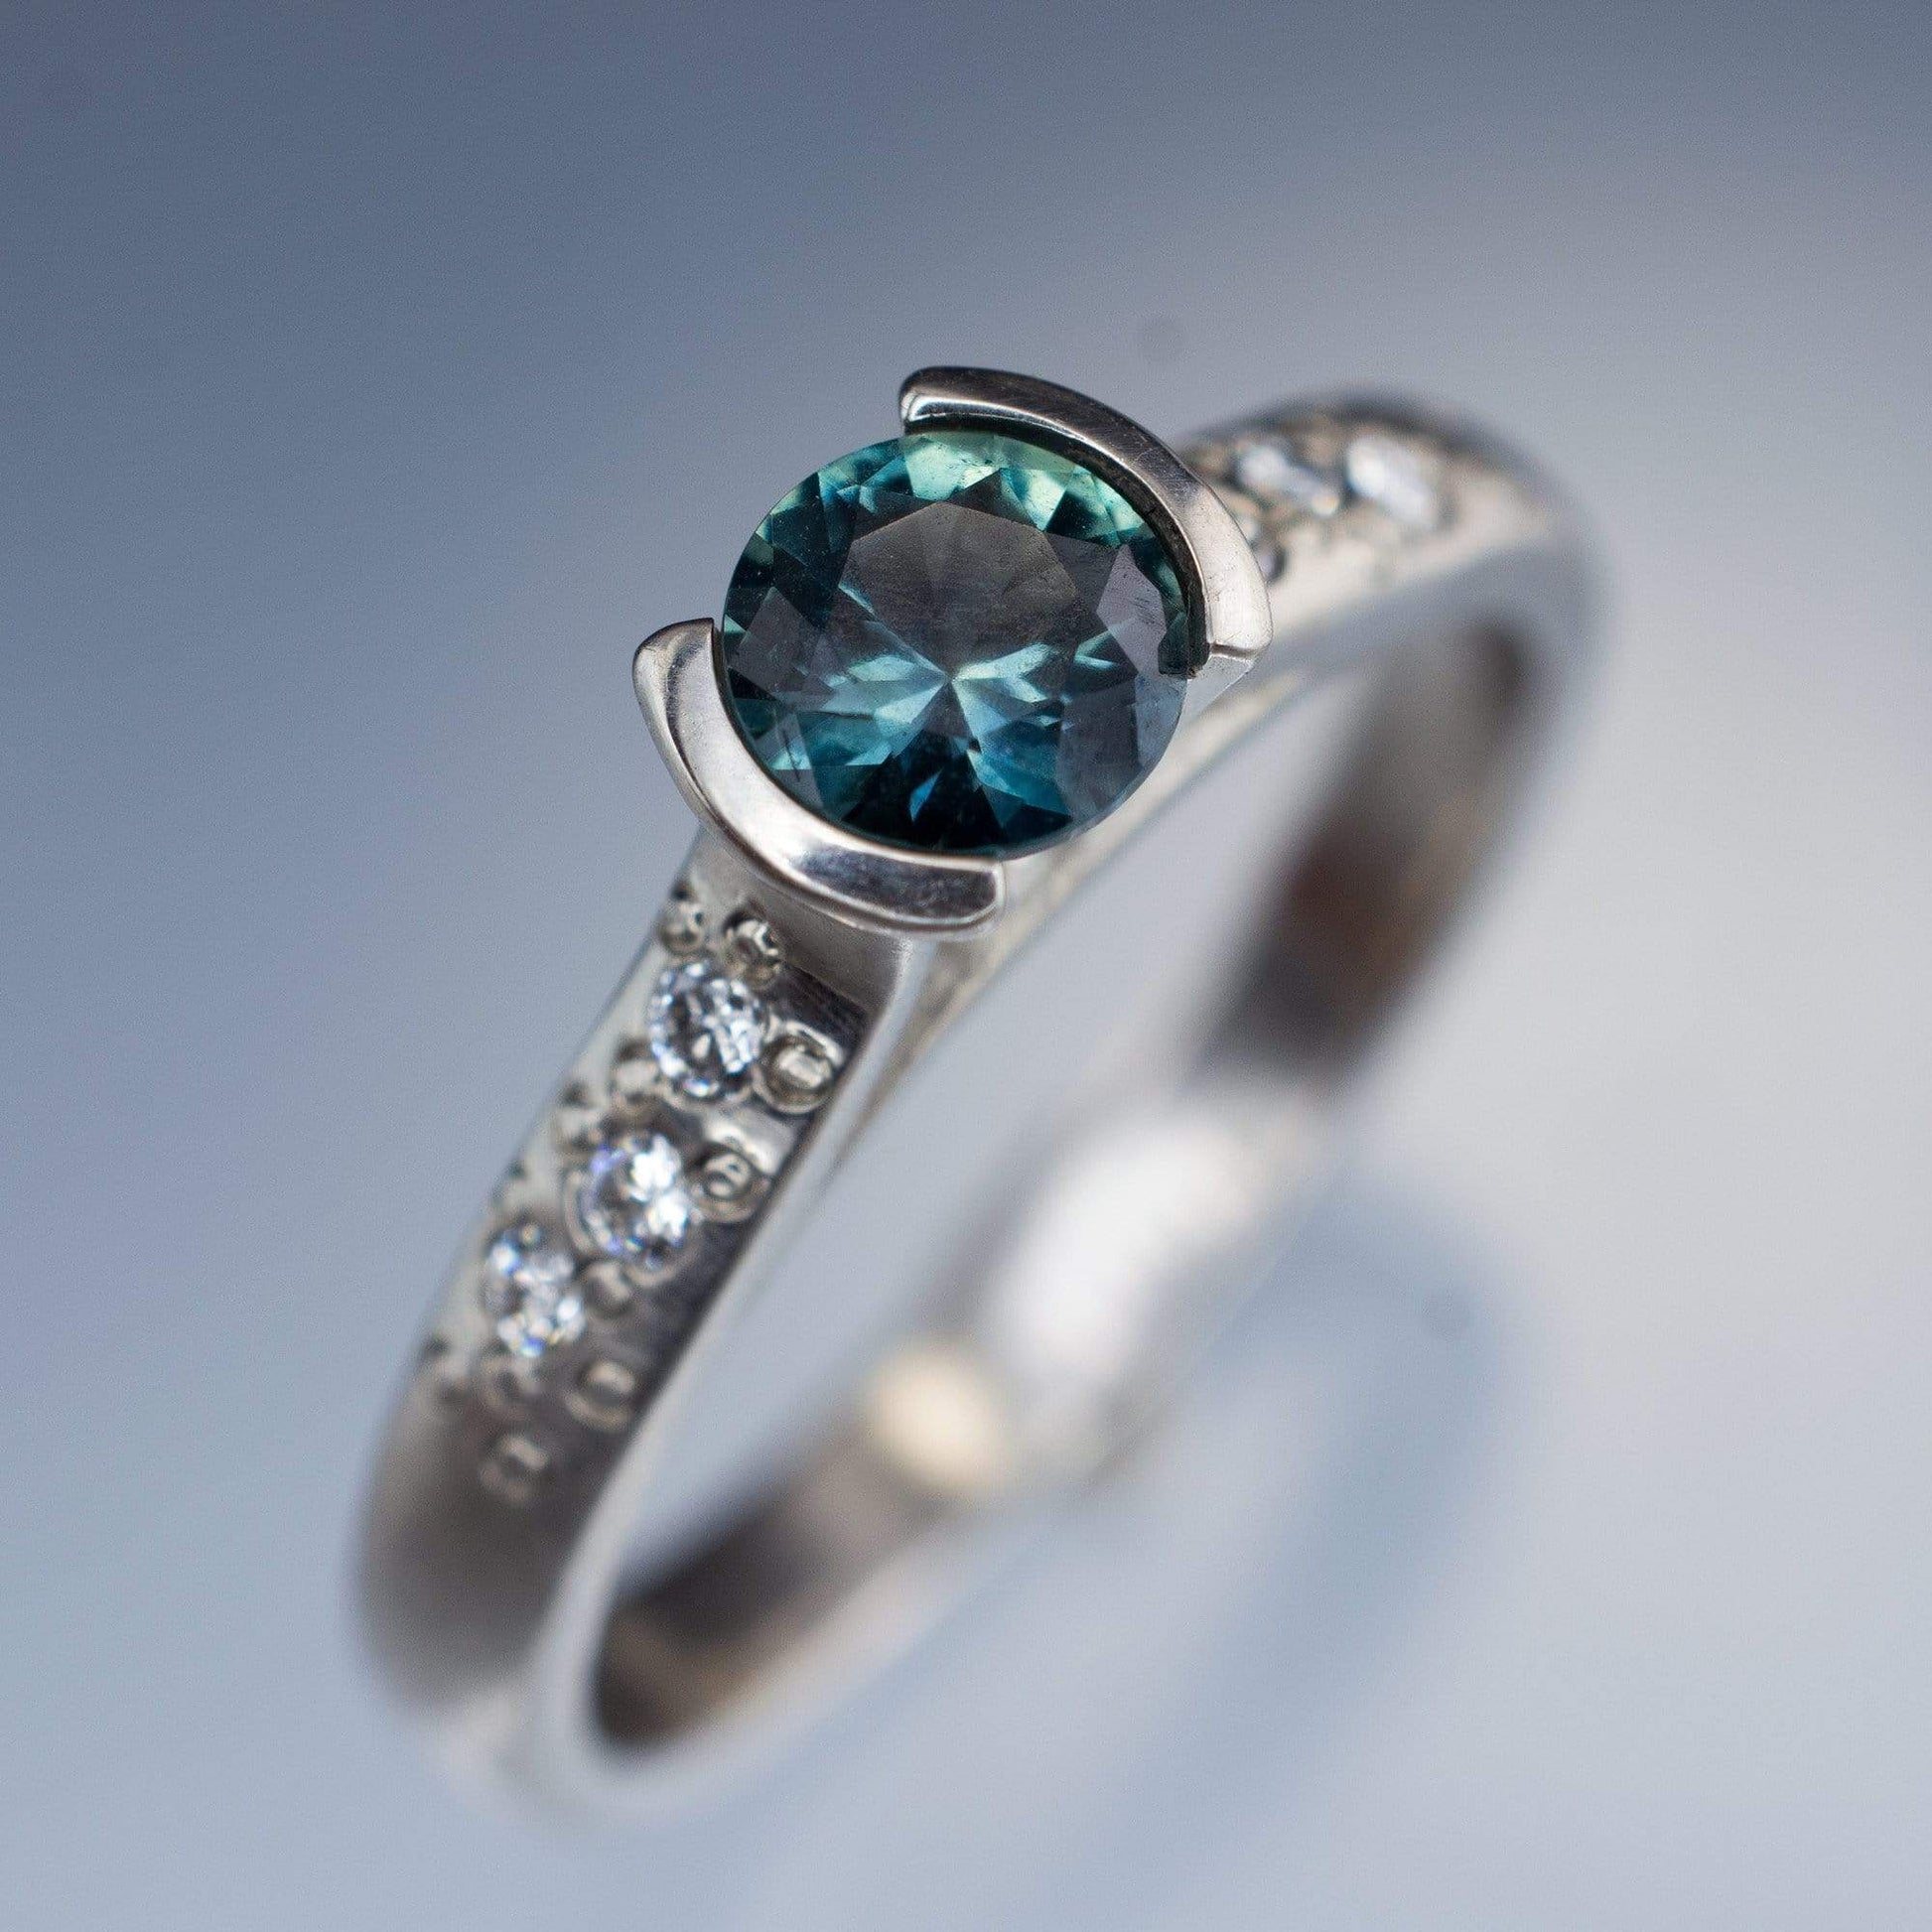 Fair Trade Blue / Teal Montana Sapphire Half Bezel Diamond Star Dust Engagement Ring 5mmTeal Sapphire: C/D / 18kPD White Gold Ring by Nodeform